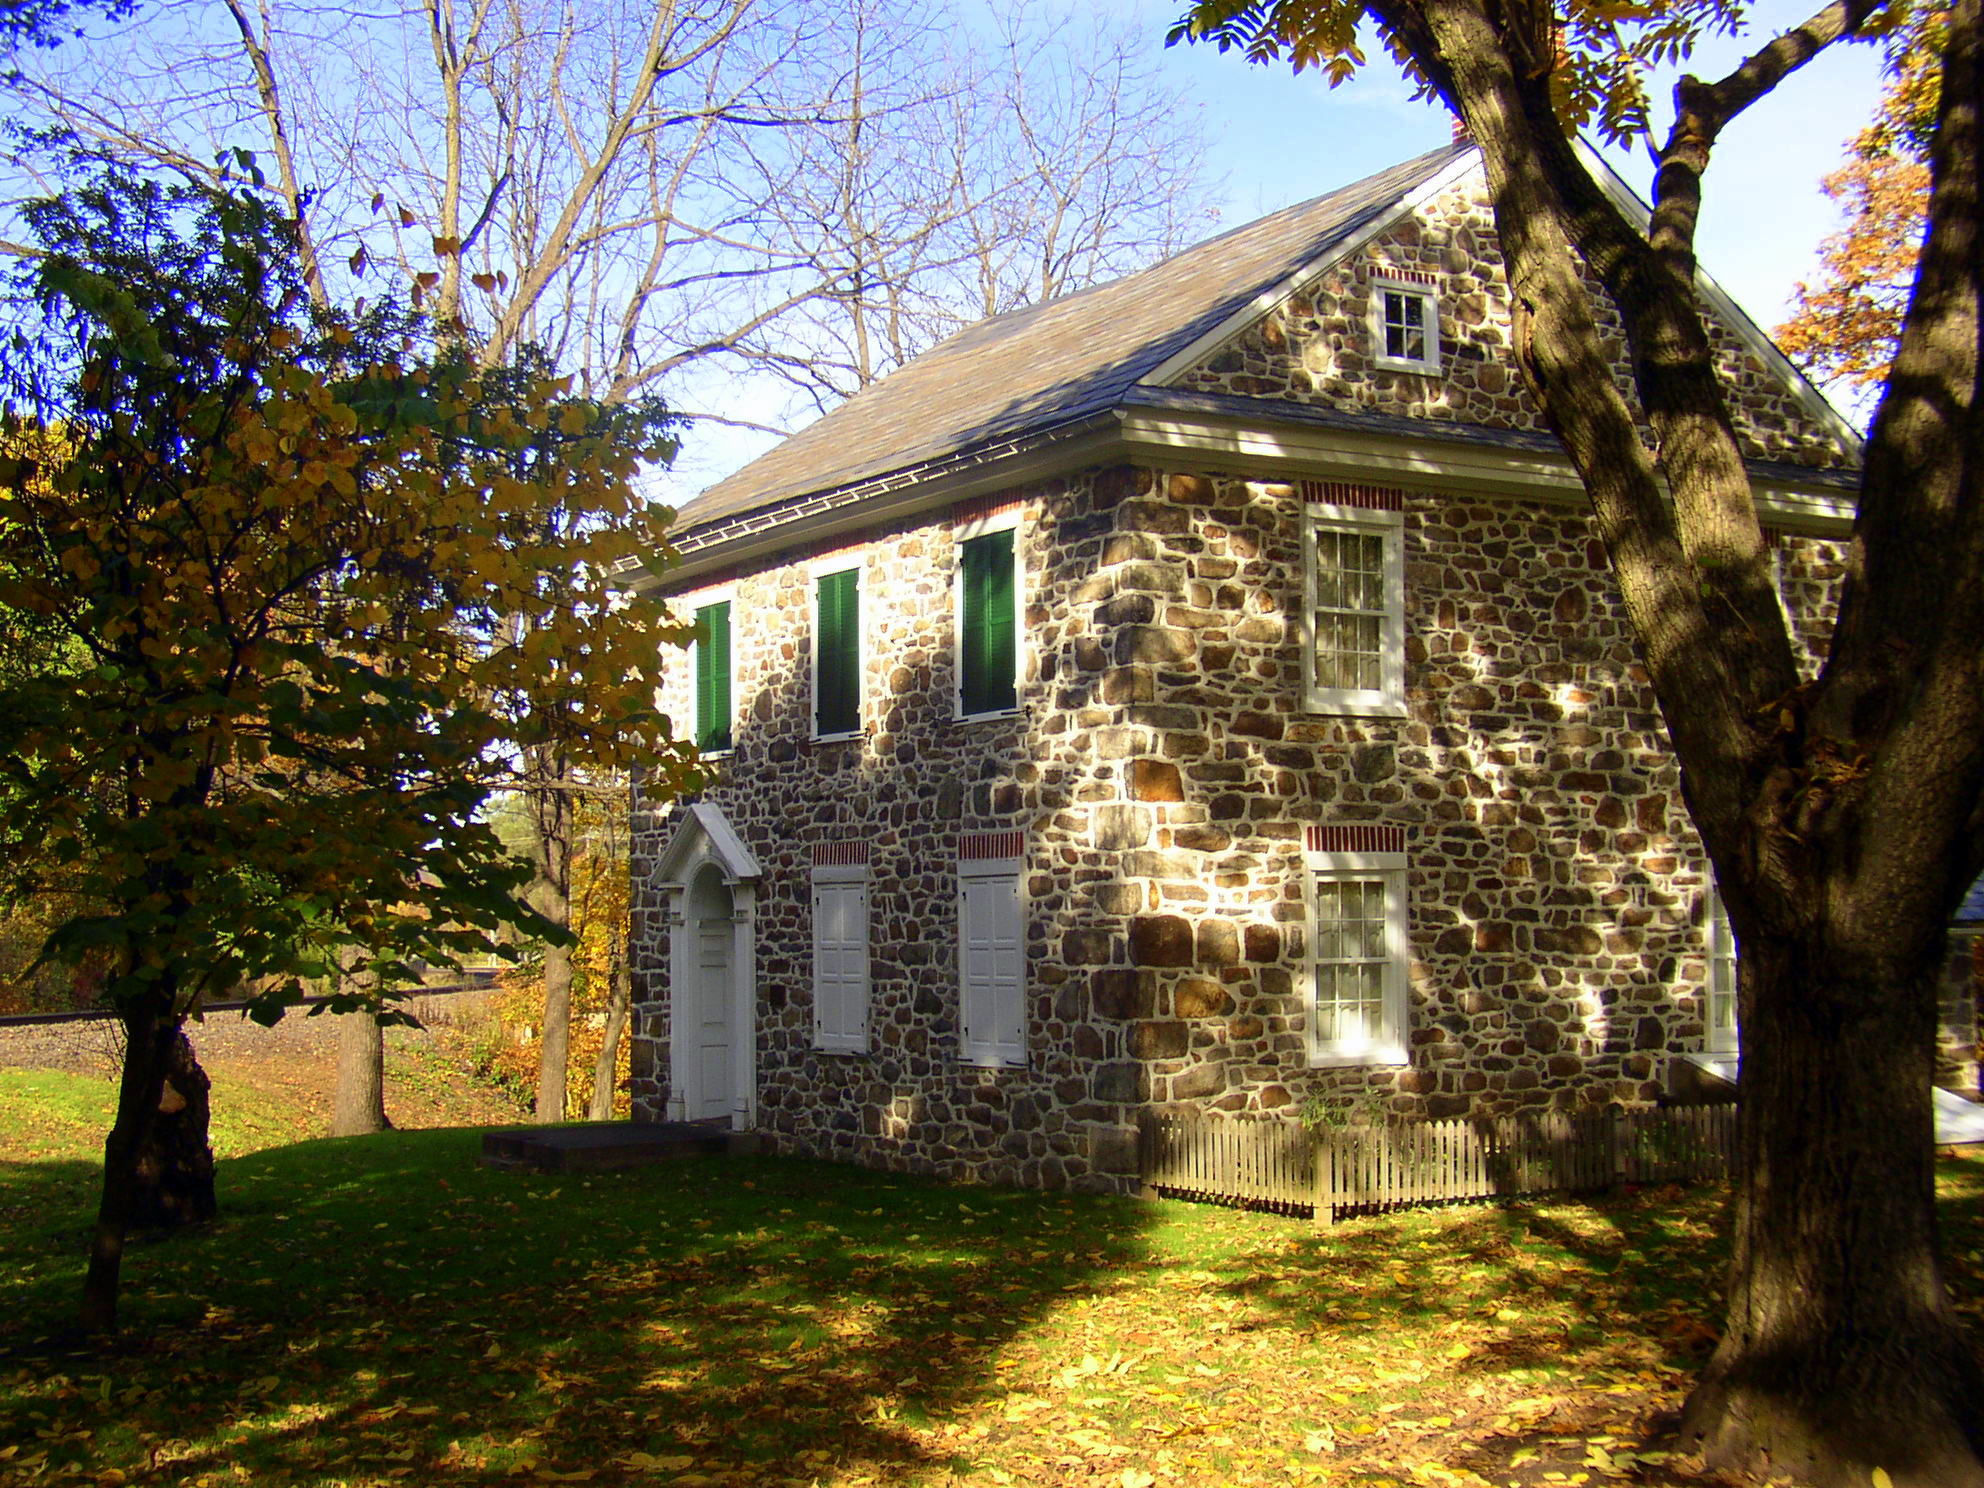 The 1803 House